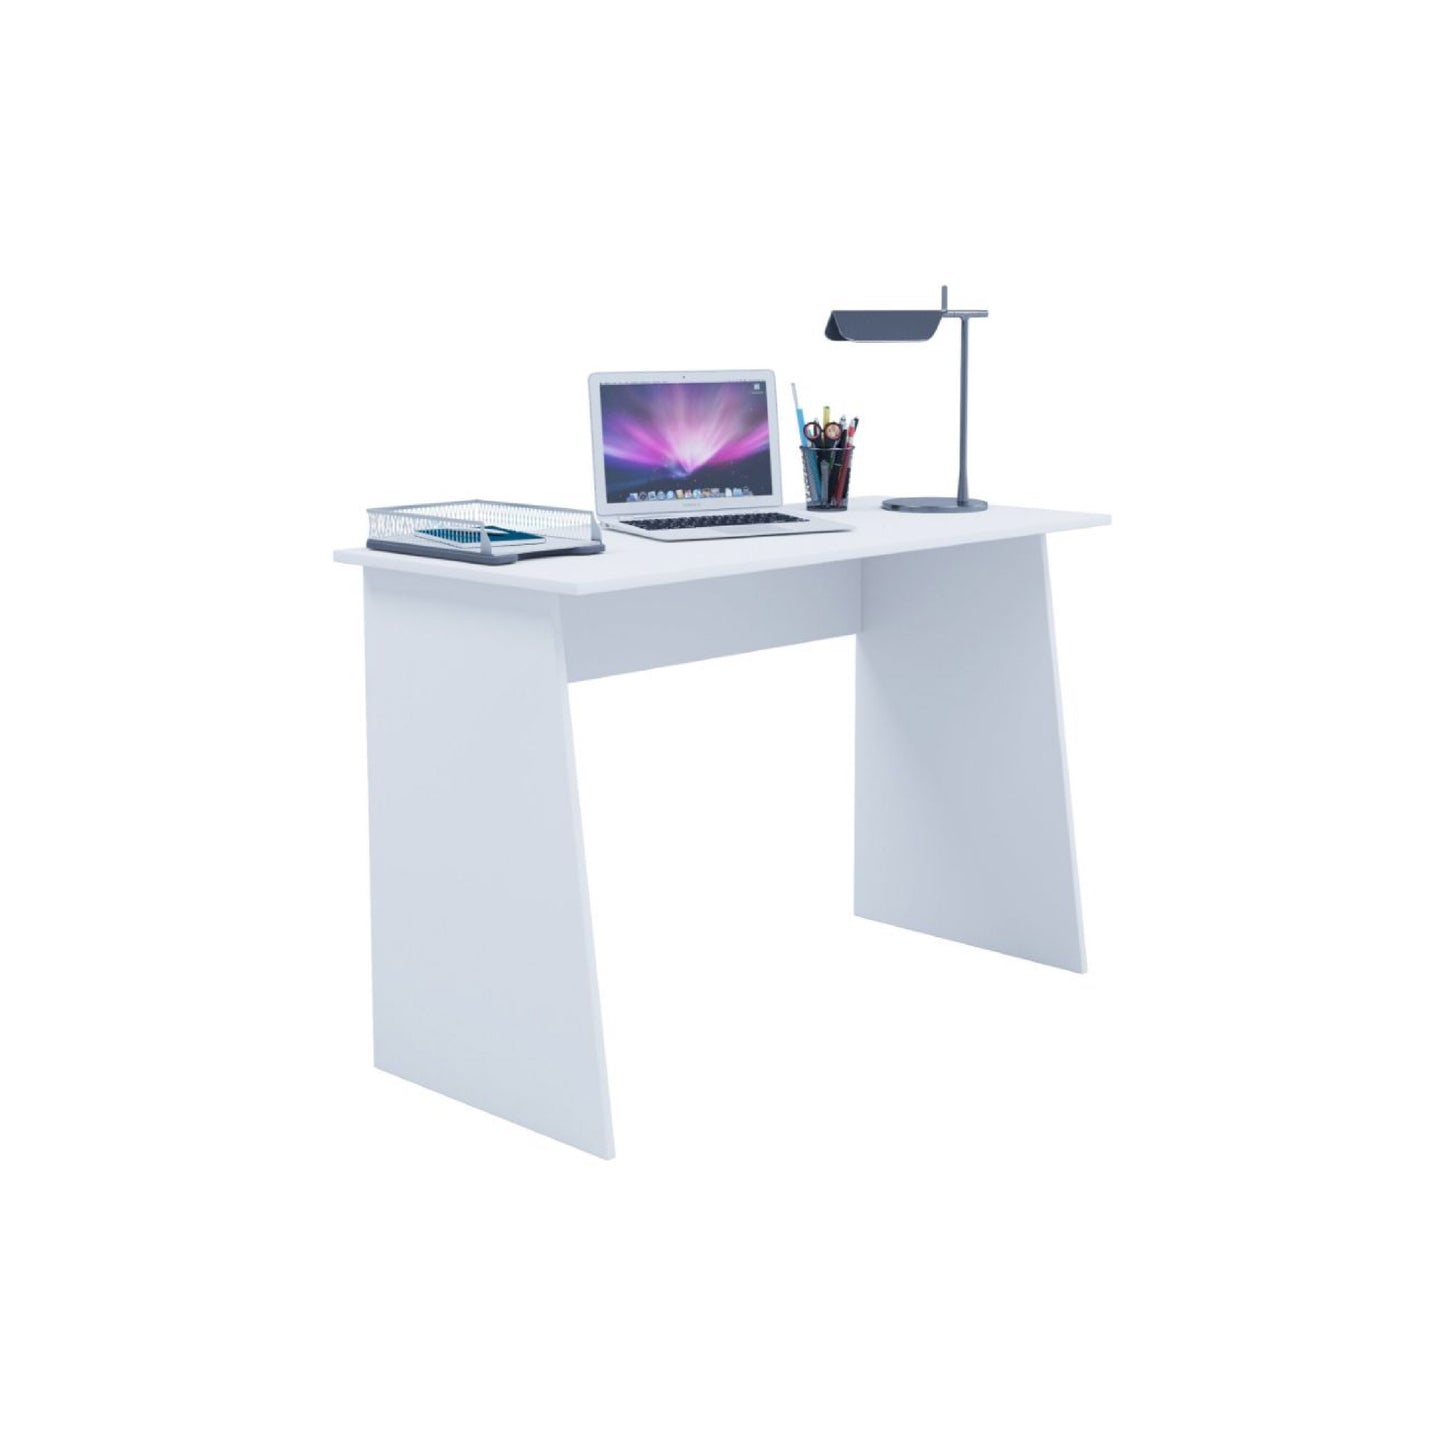 'Dali' Desk LG